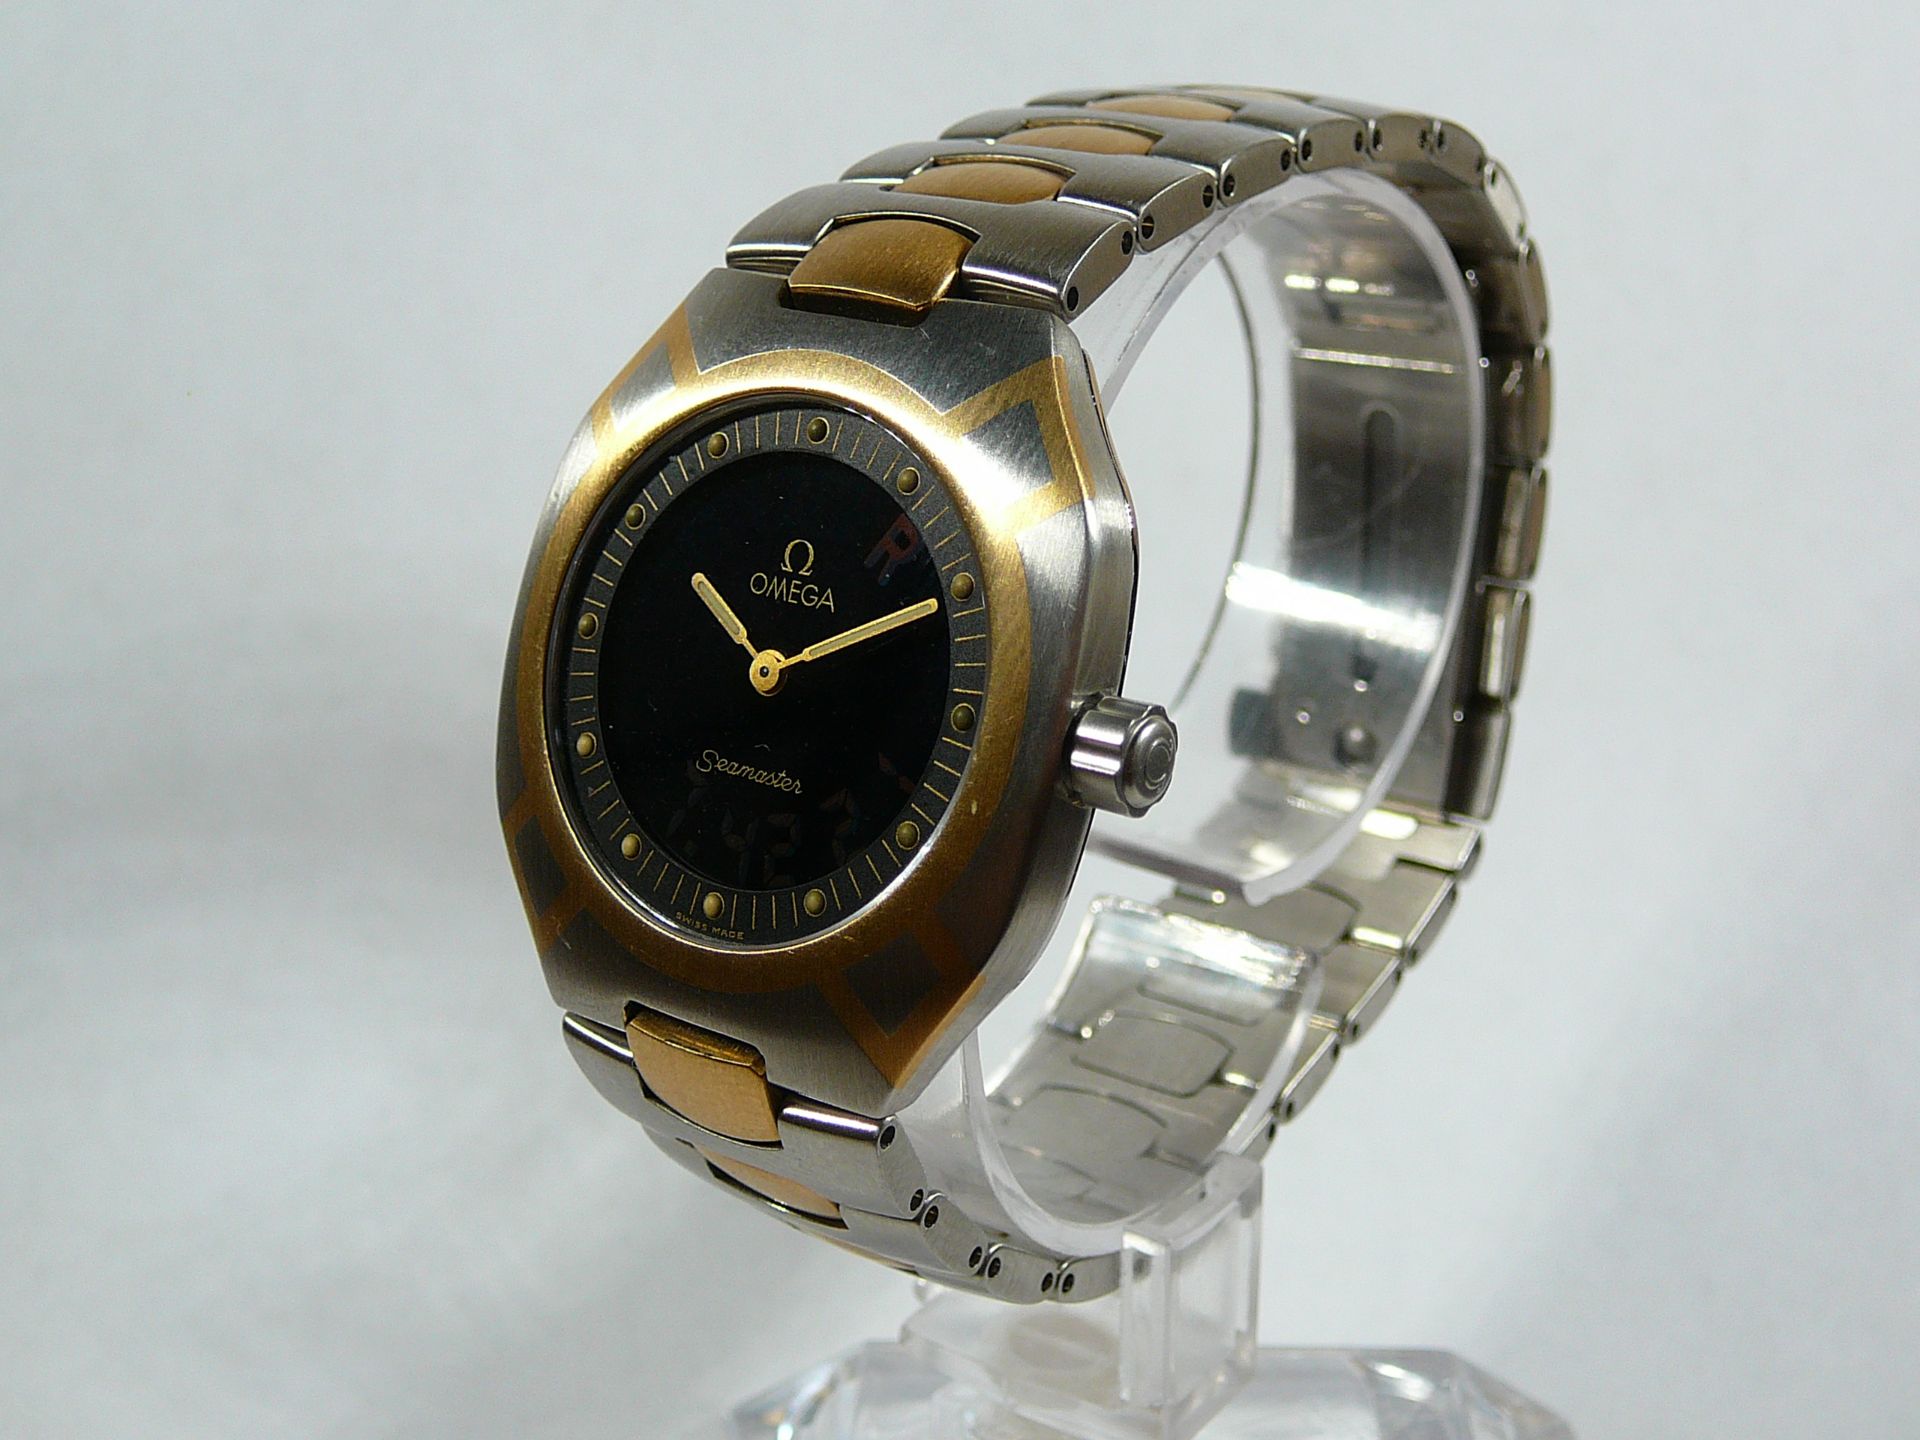 Gents Omega Wrist Watch